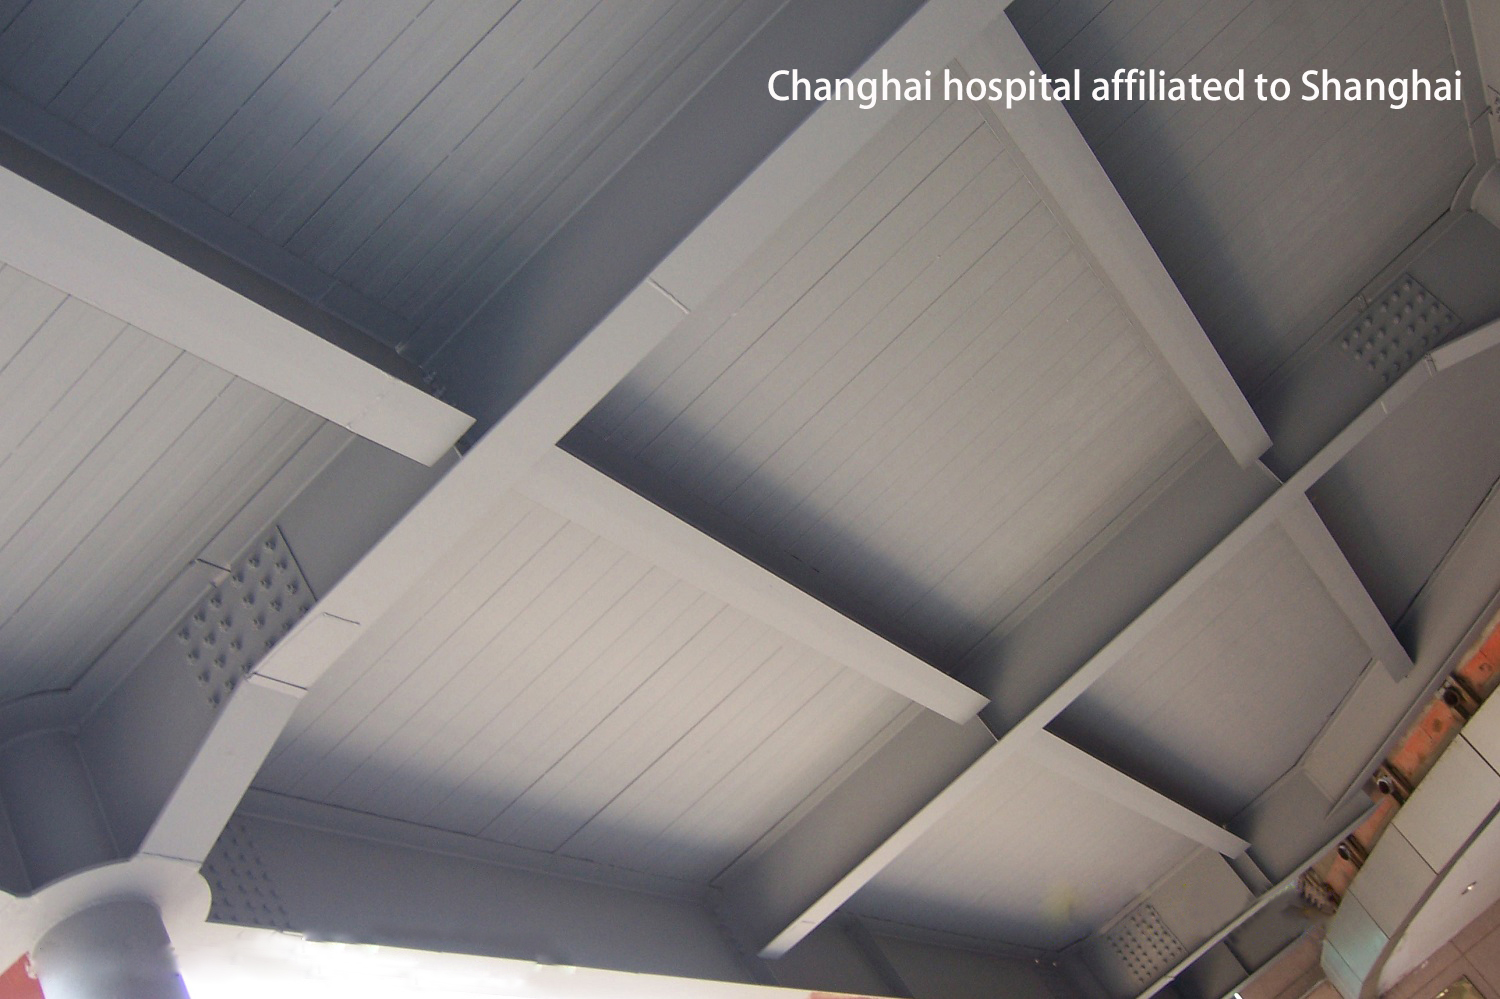  Changhai hospital affiliated to Shanghai 03